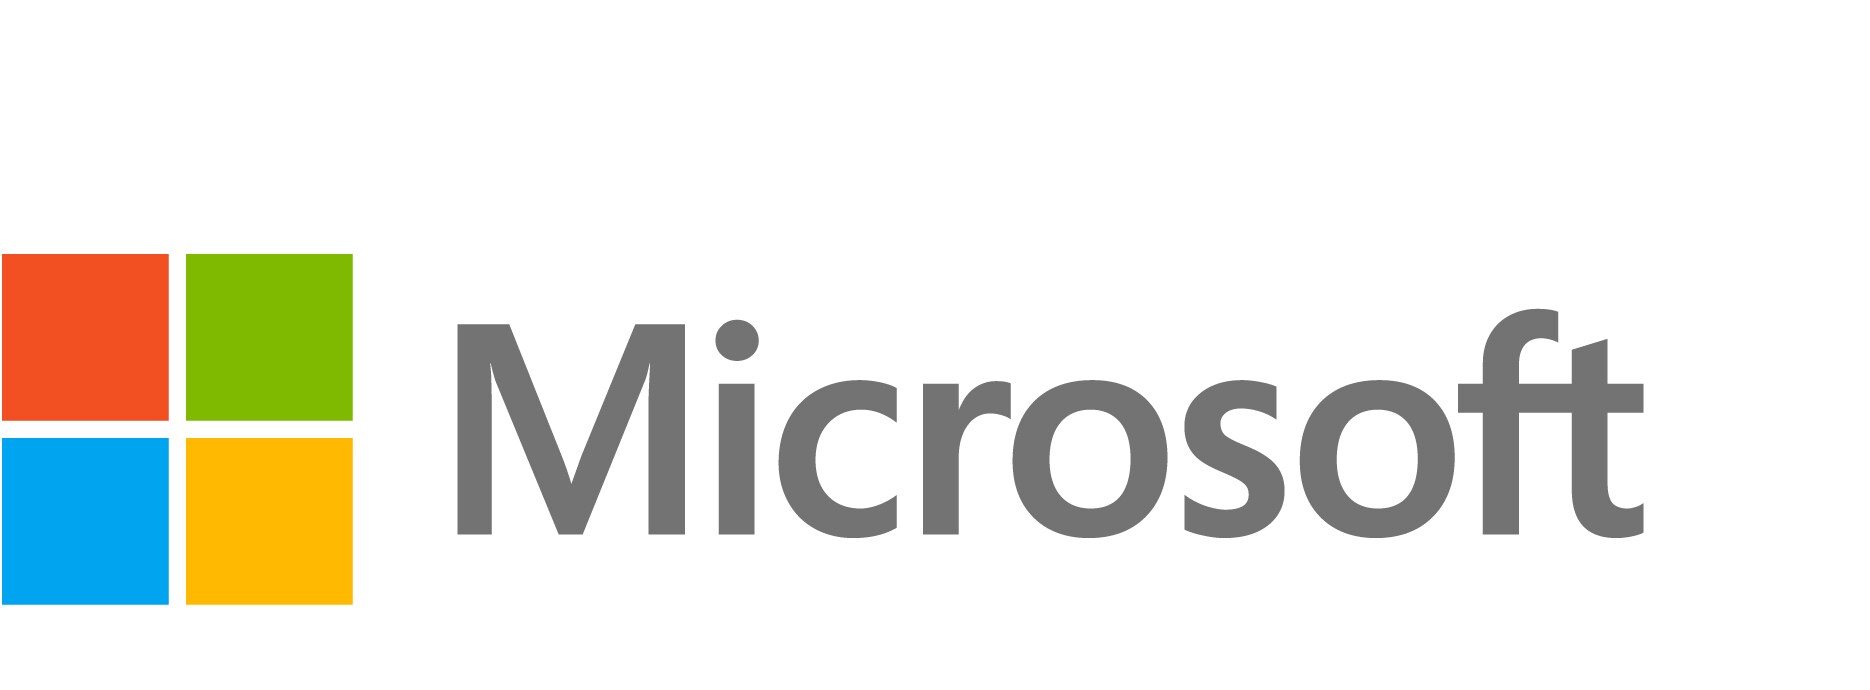 Microsoft Dynamics 365 e-Commerce - subscription license (1 month) - 1 license